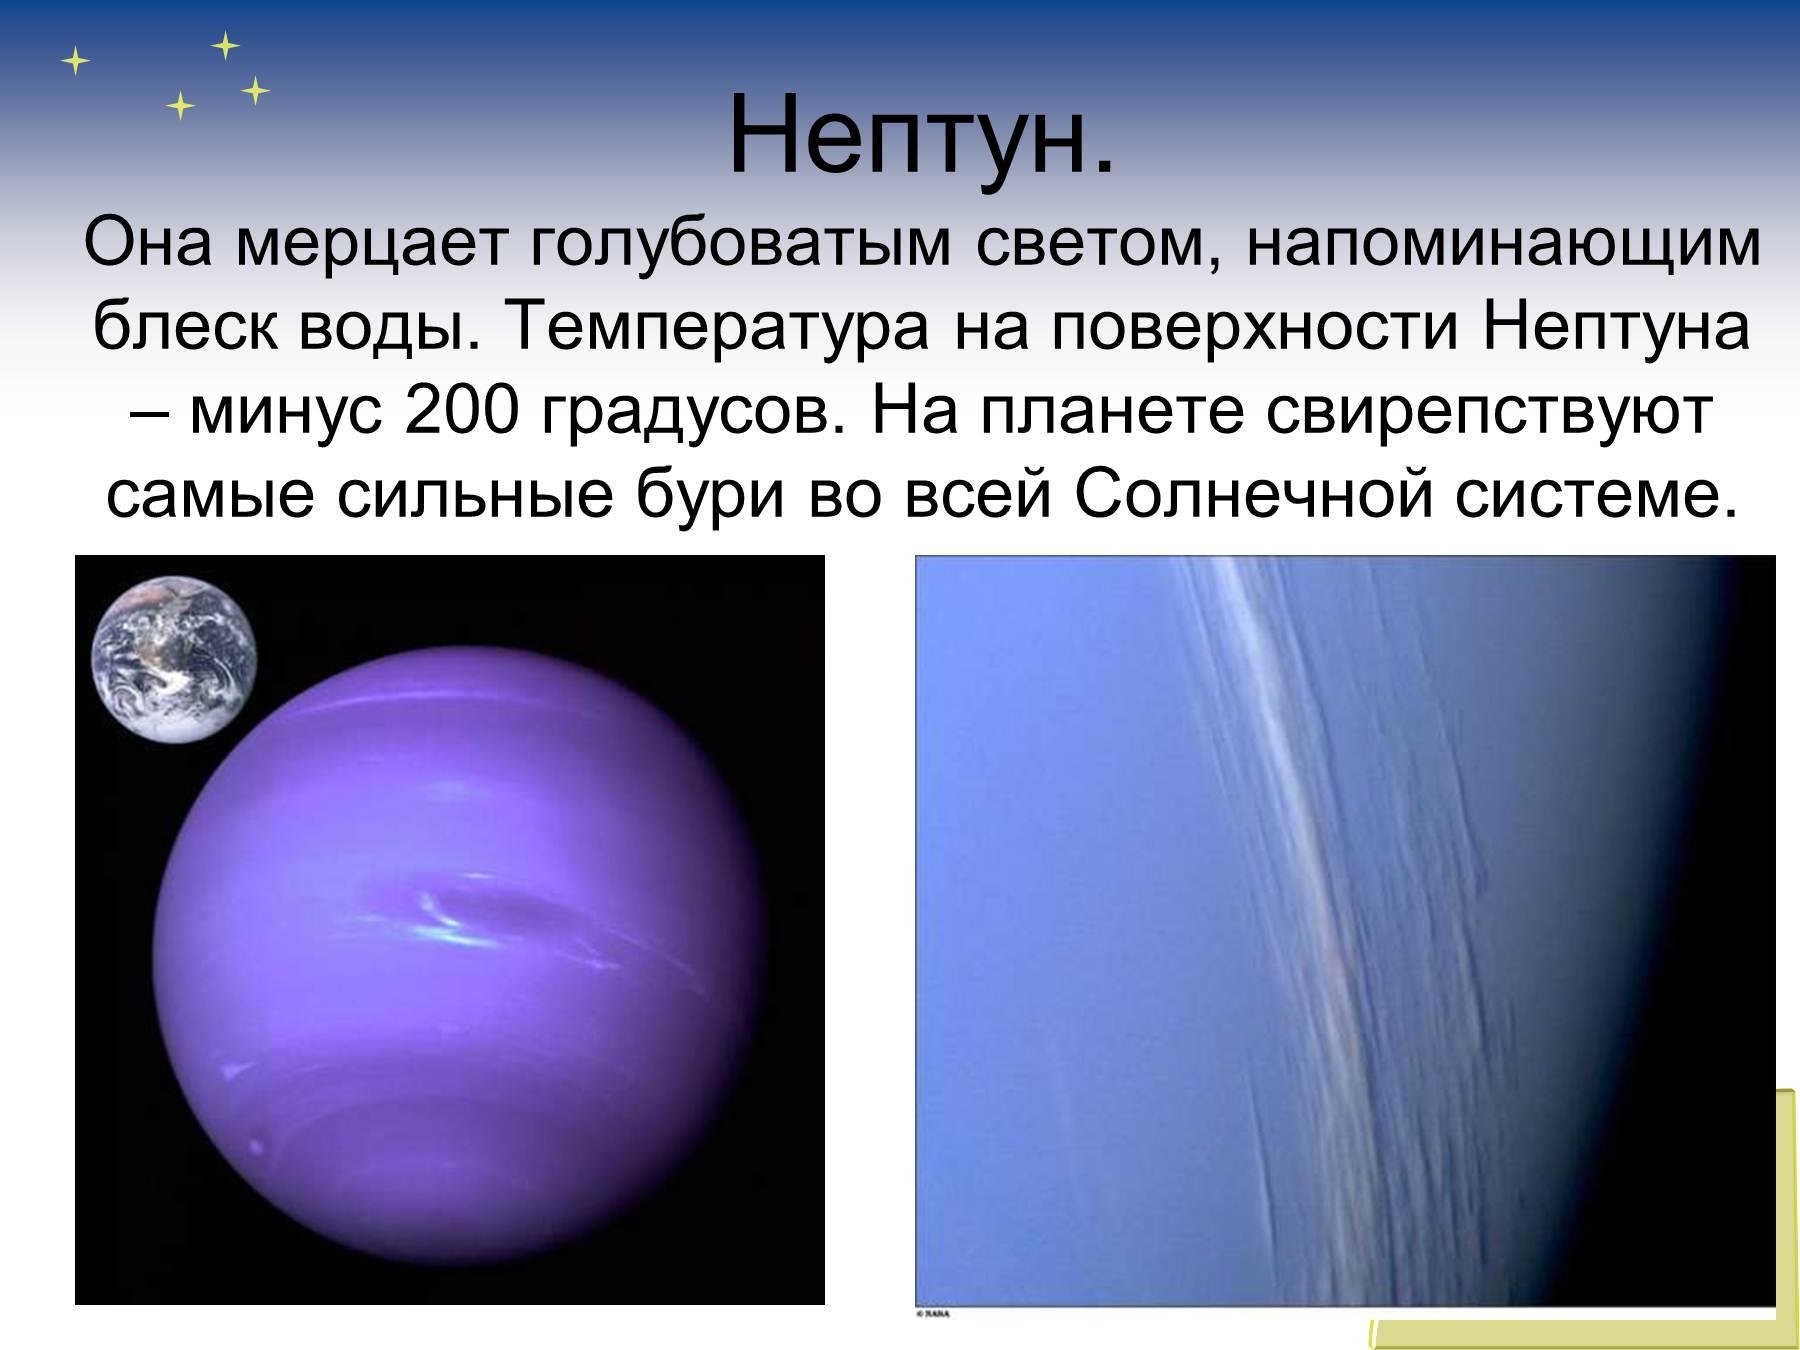 Нептун режим работы. Нептун презентация. Нептун (Планета). Температура Нептуна. Презентация на тему Планета Нептун.